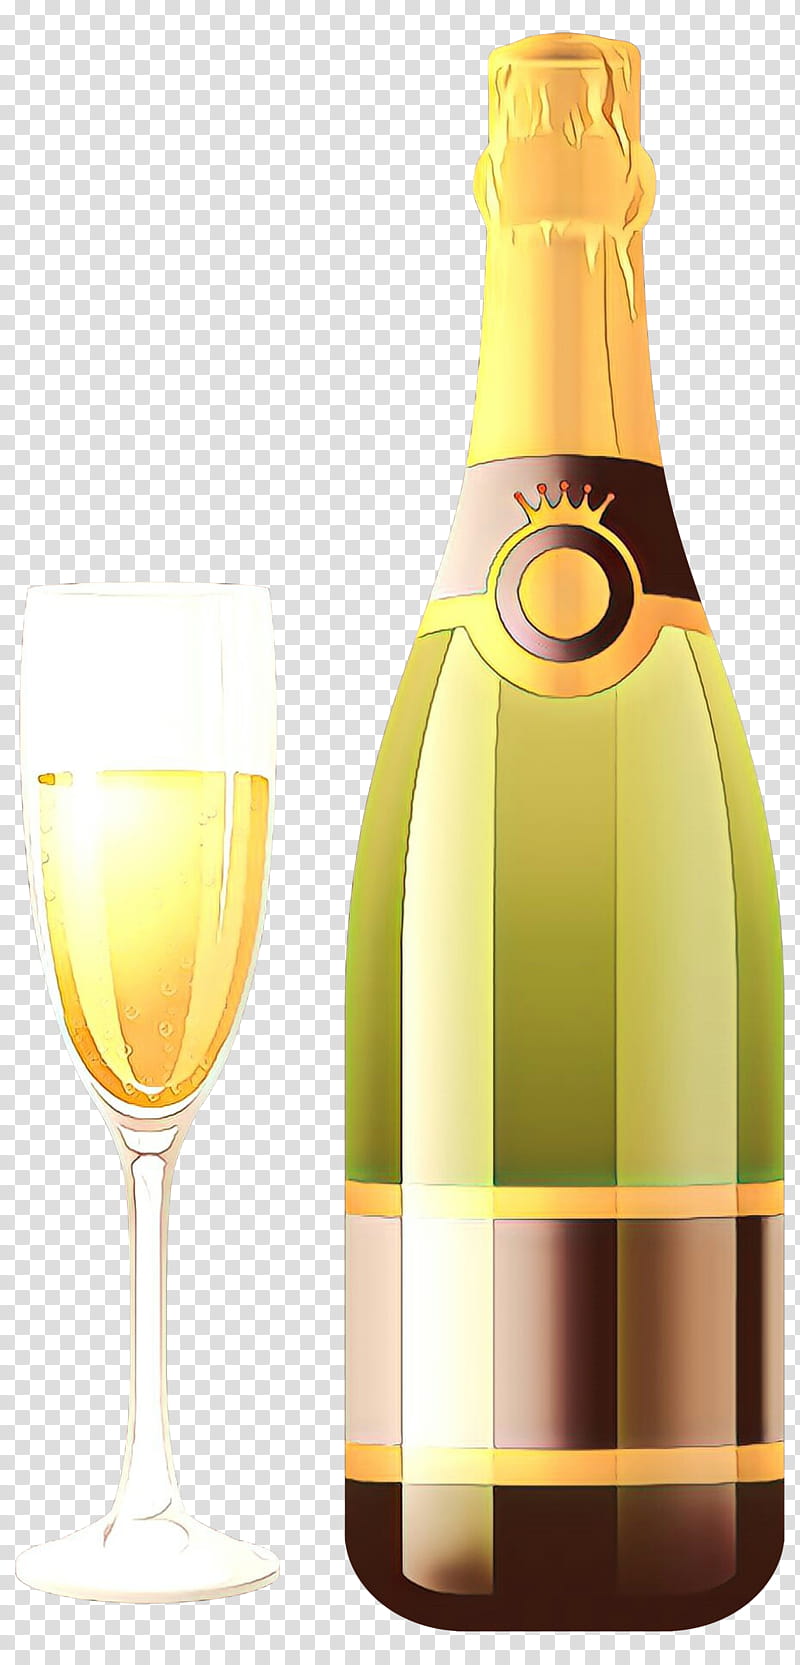 Champagne Bottle, Cartoon, White Wine, Glass Bottle, Liqueur, Drink, Champagne Cocktail, Alcoholic Beverage transparent background PNG clipart